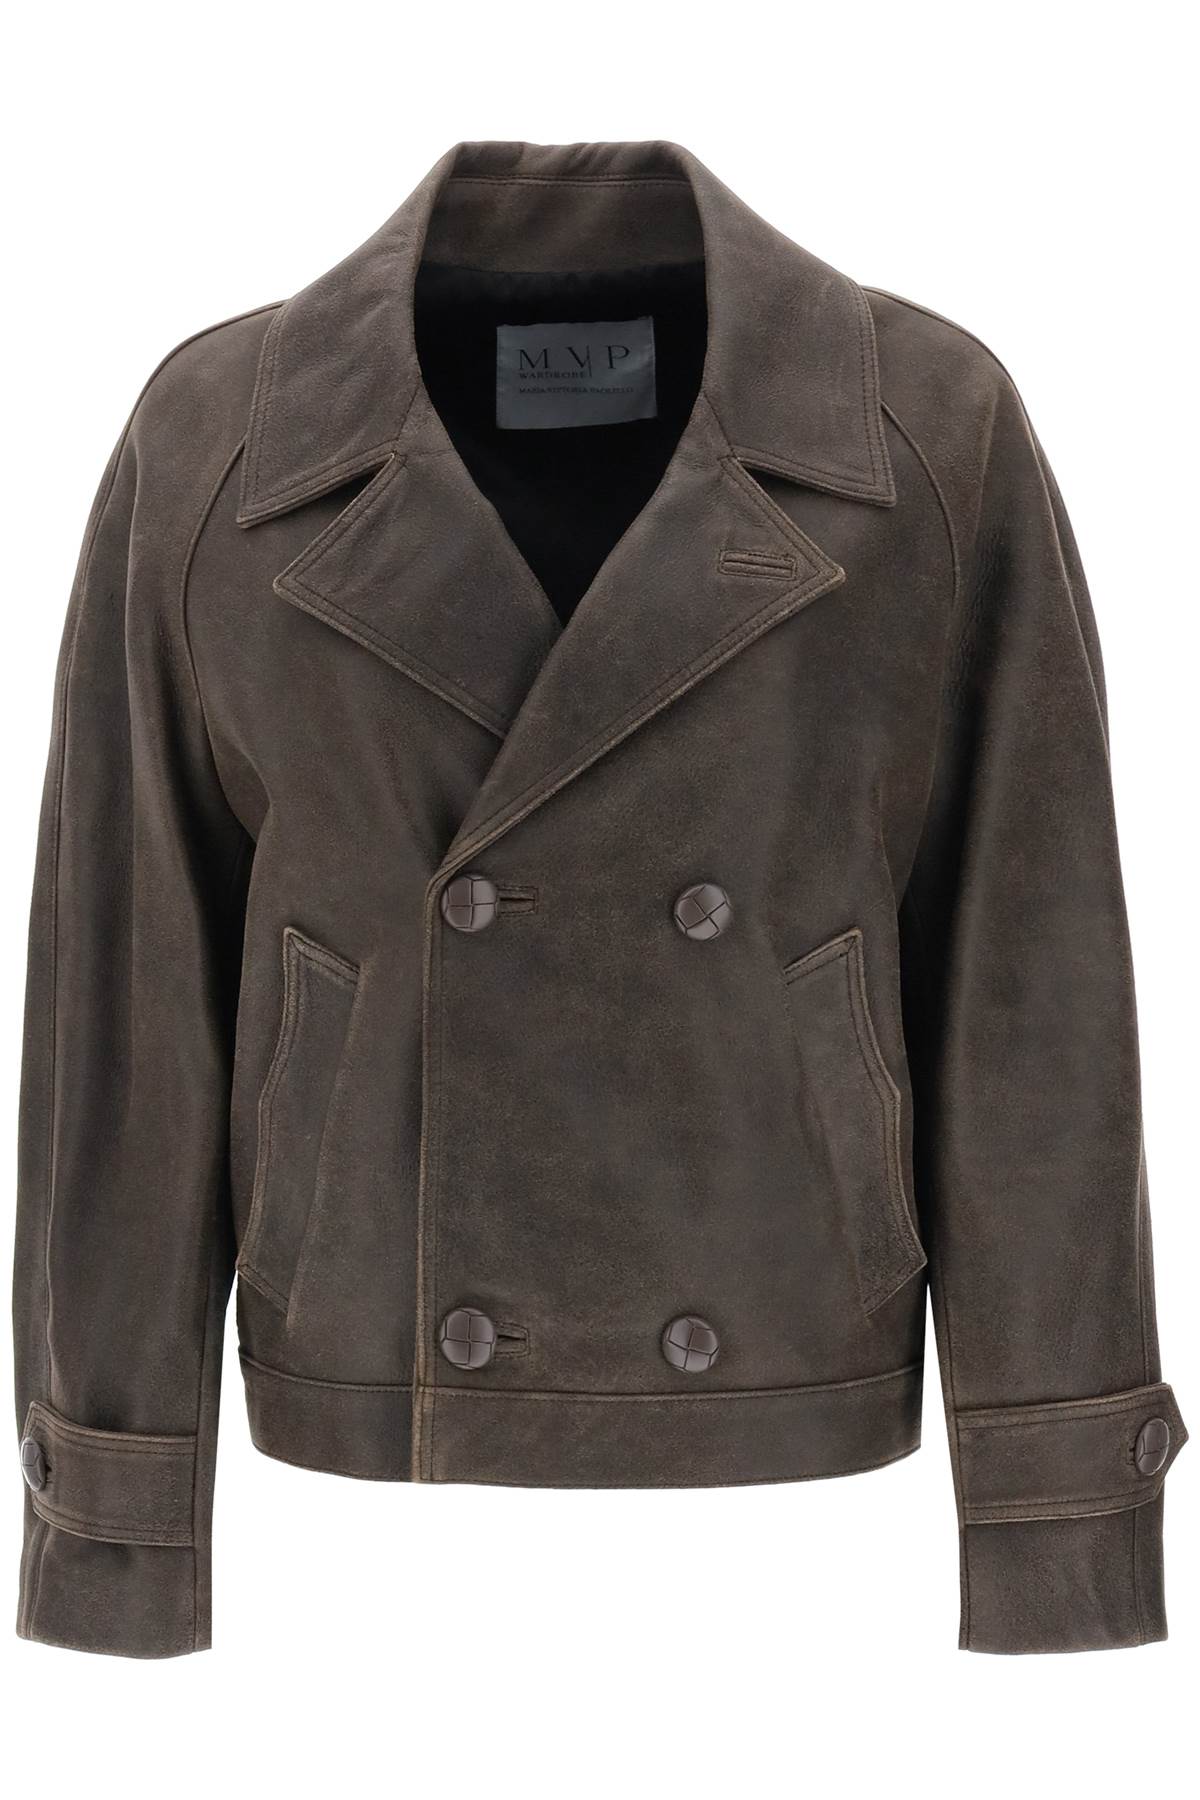 Mvp wardrobe solferino jacket in vintage-effect leather-0